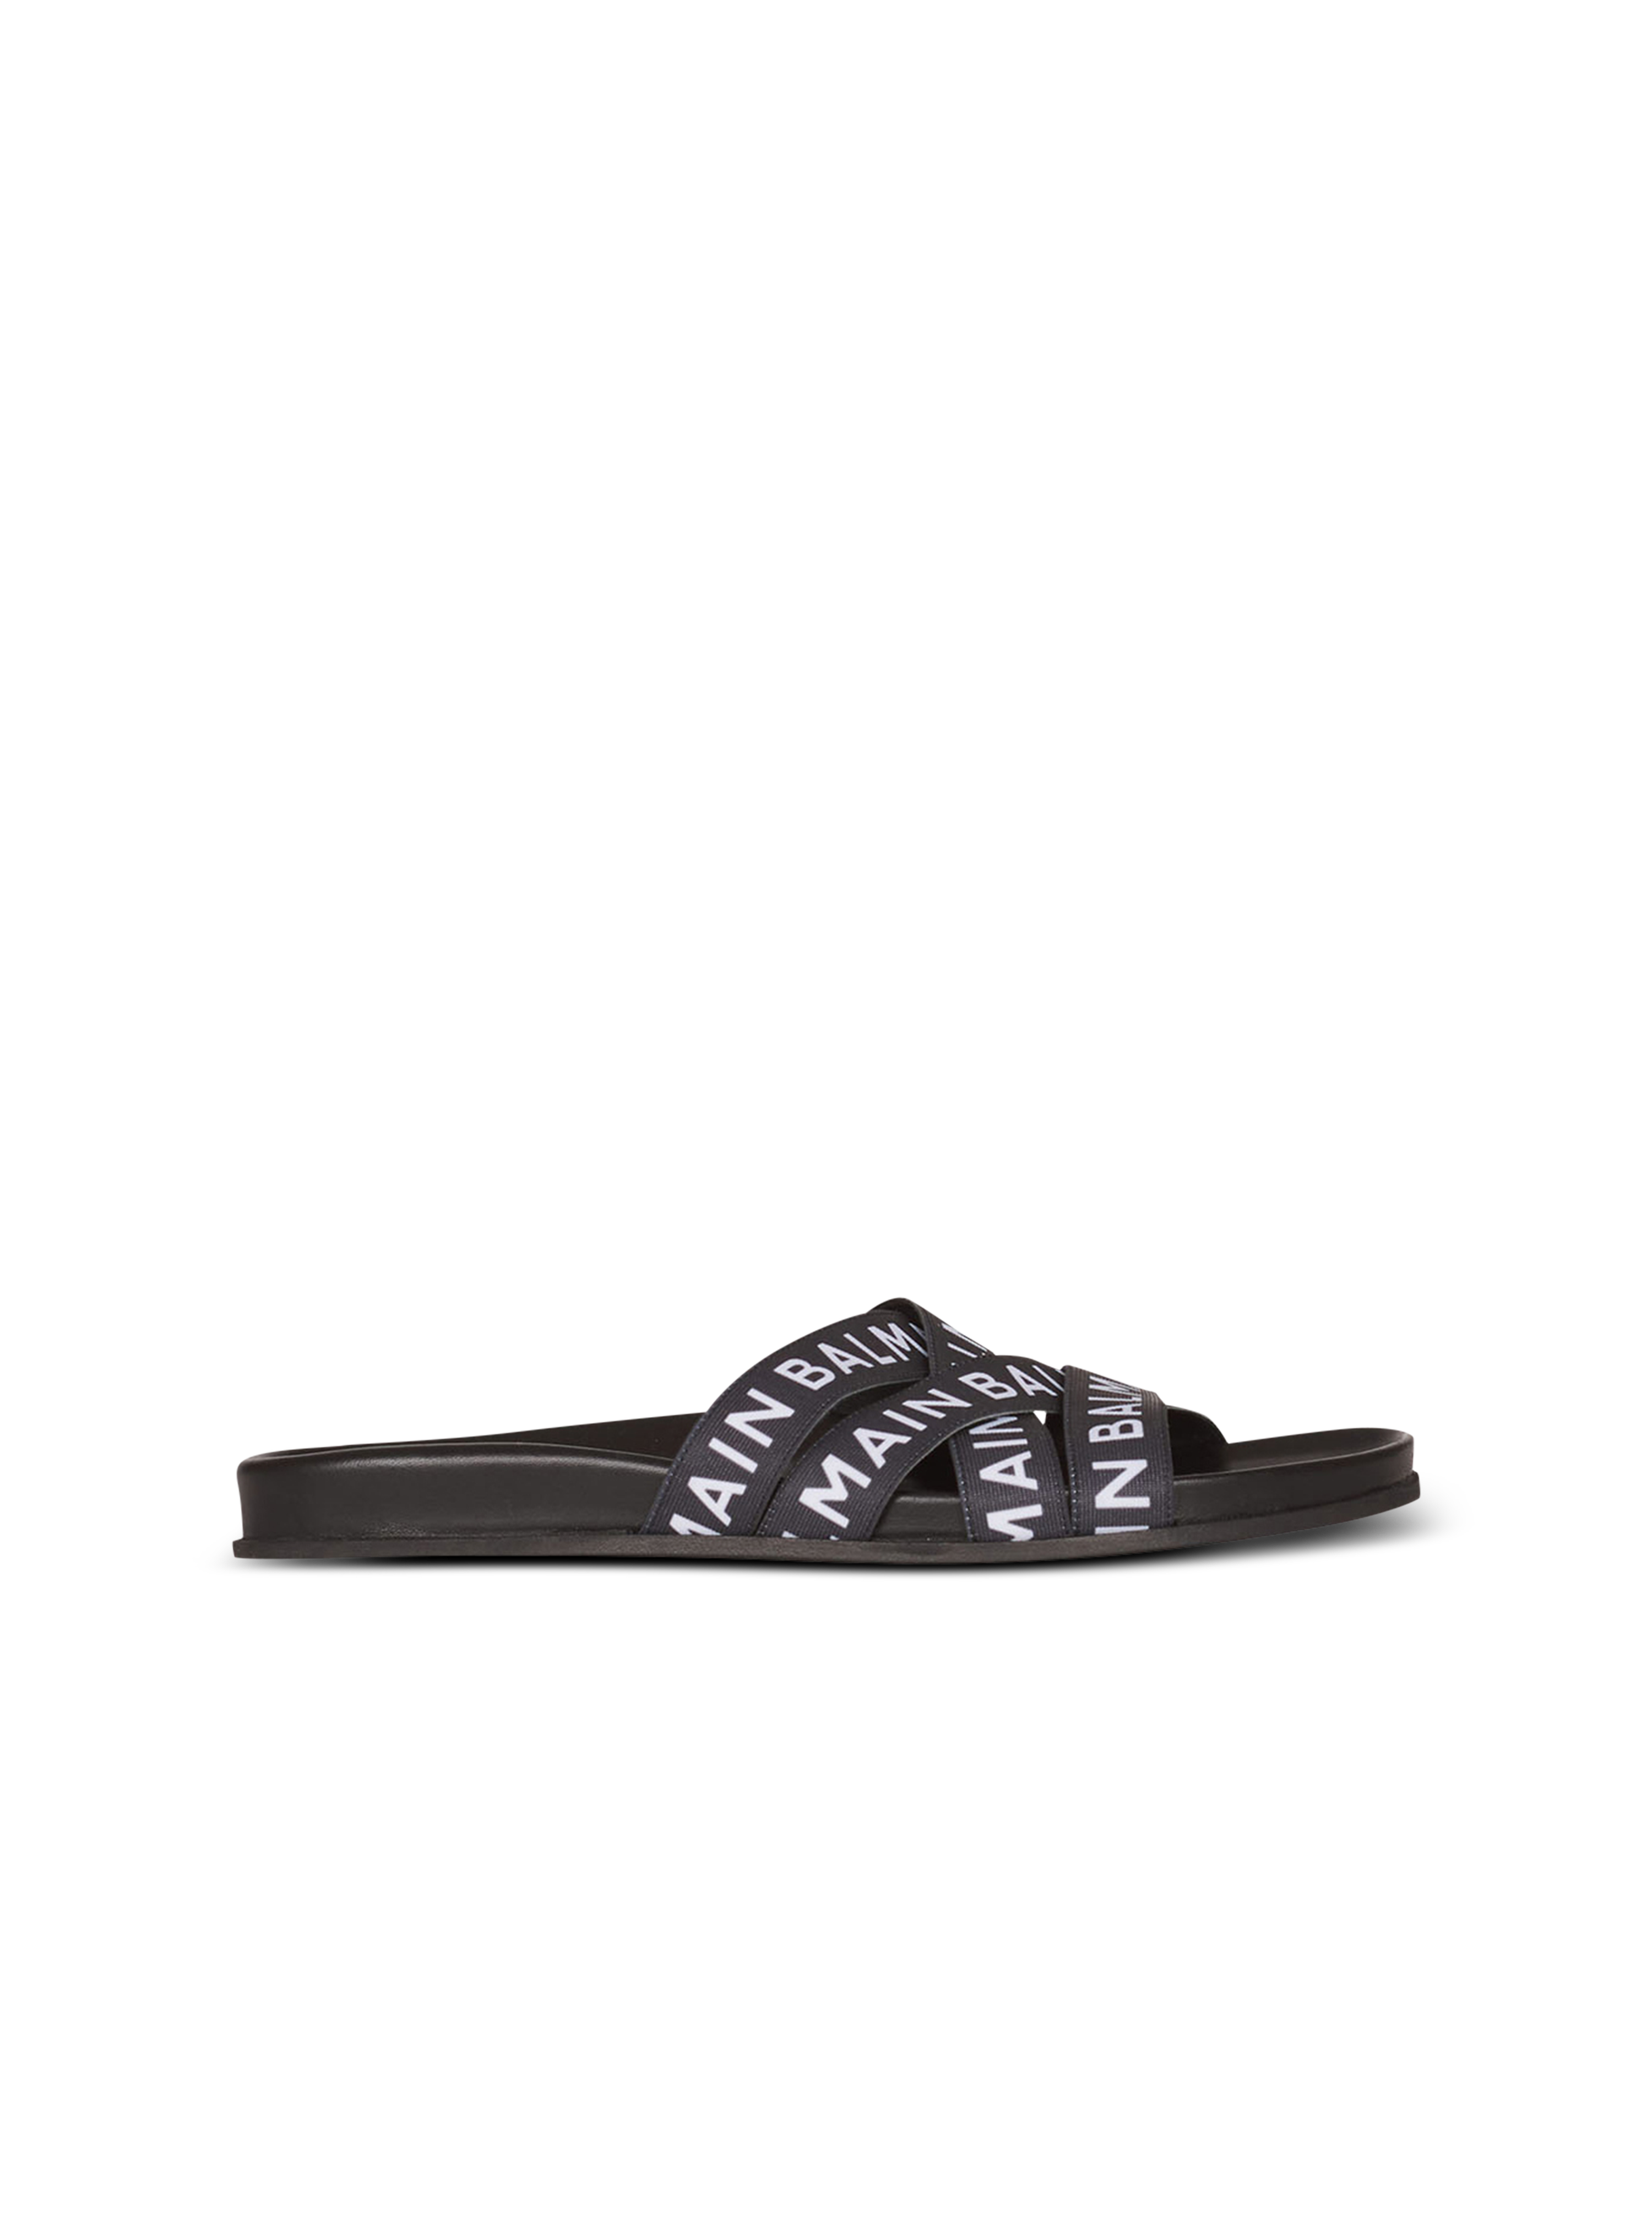  Union flip flops with Balmain logo print, black, hi-res